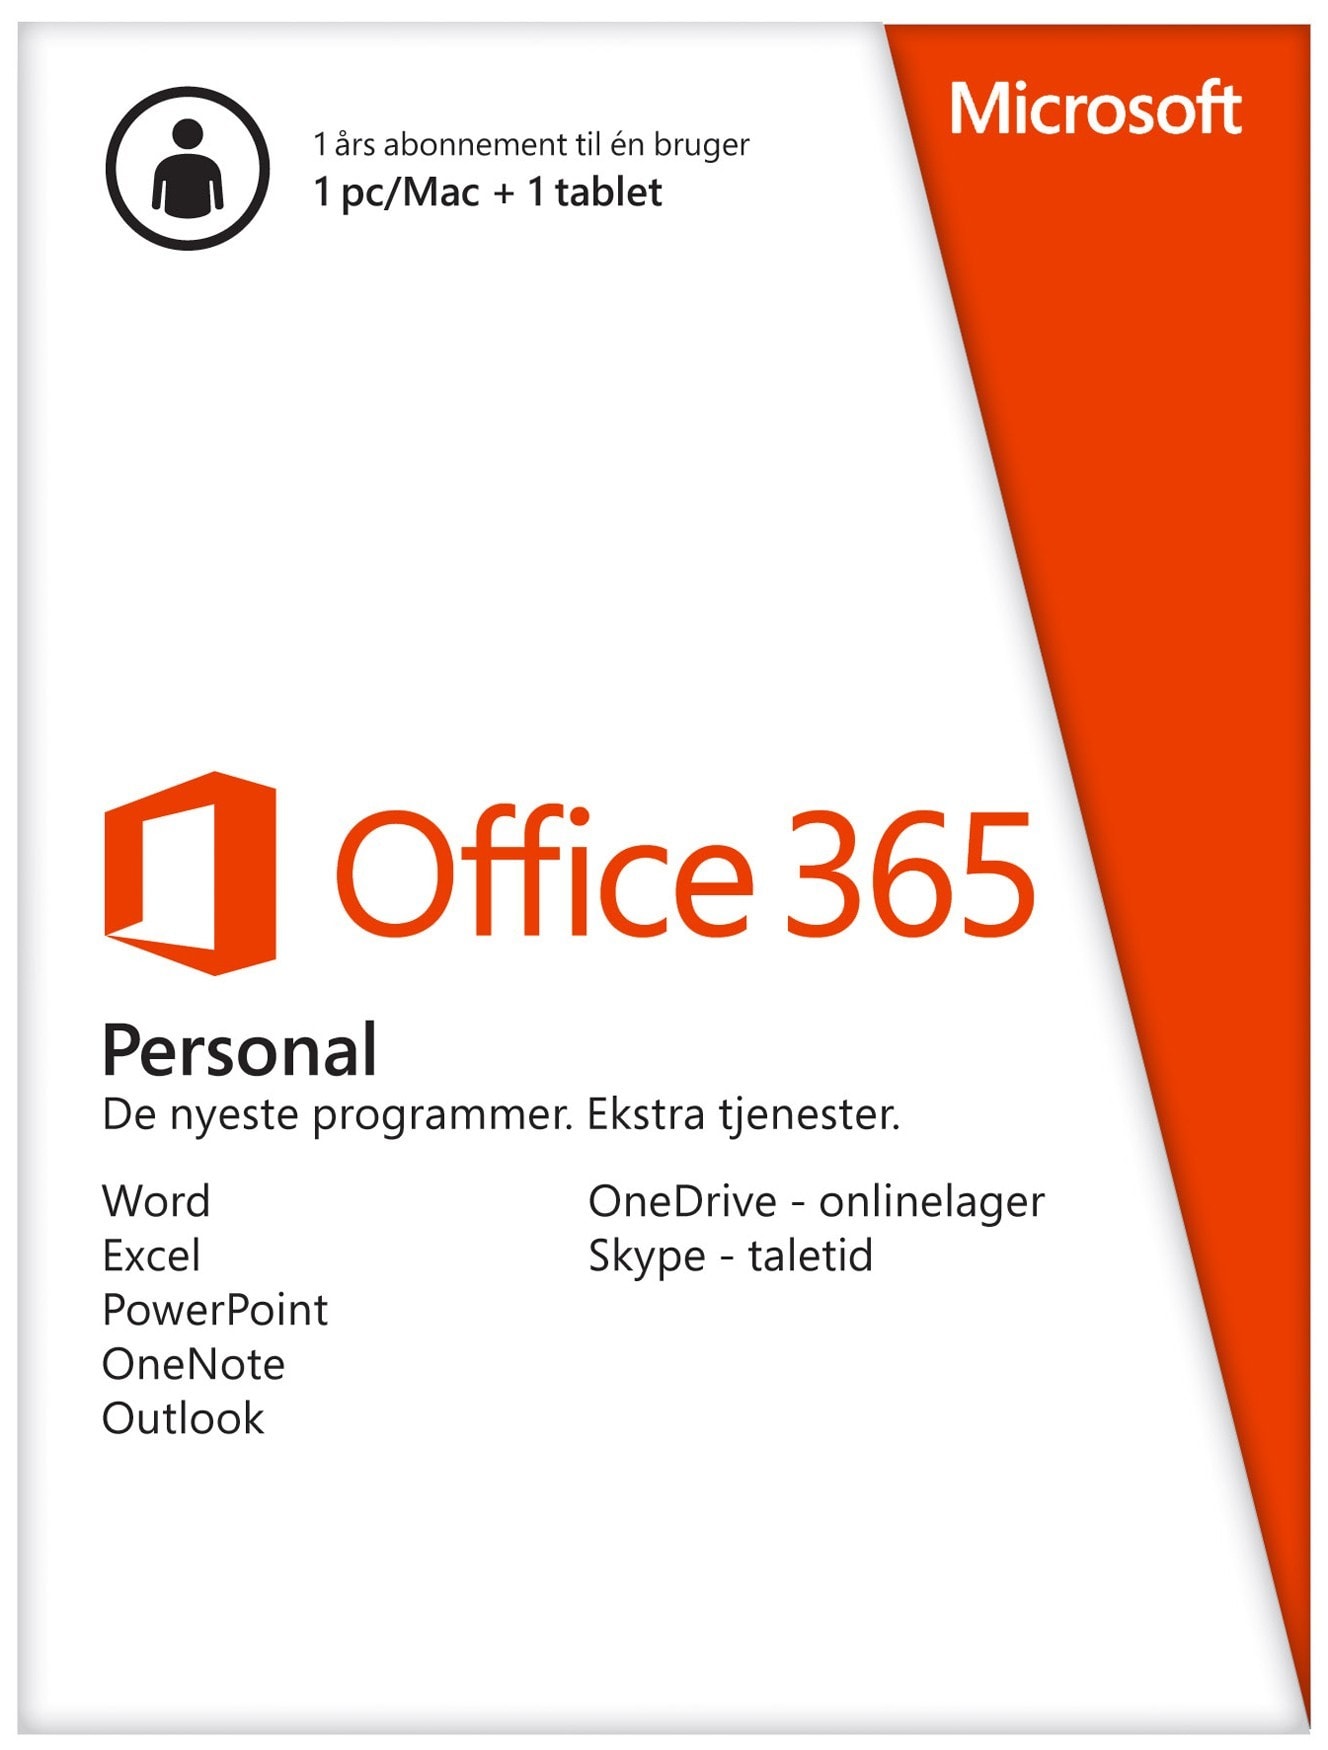 Microsoft Office 365 Personal - 1 års abonnement | Elgiganten